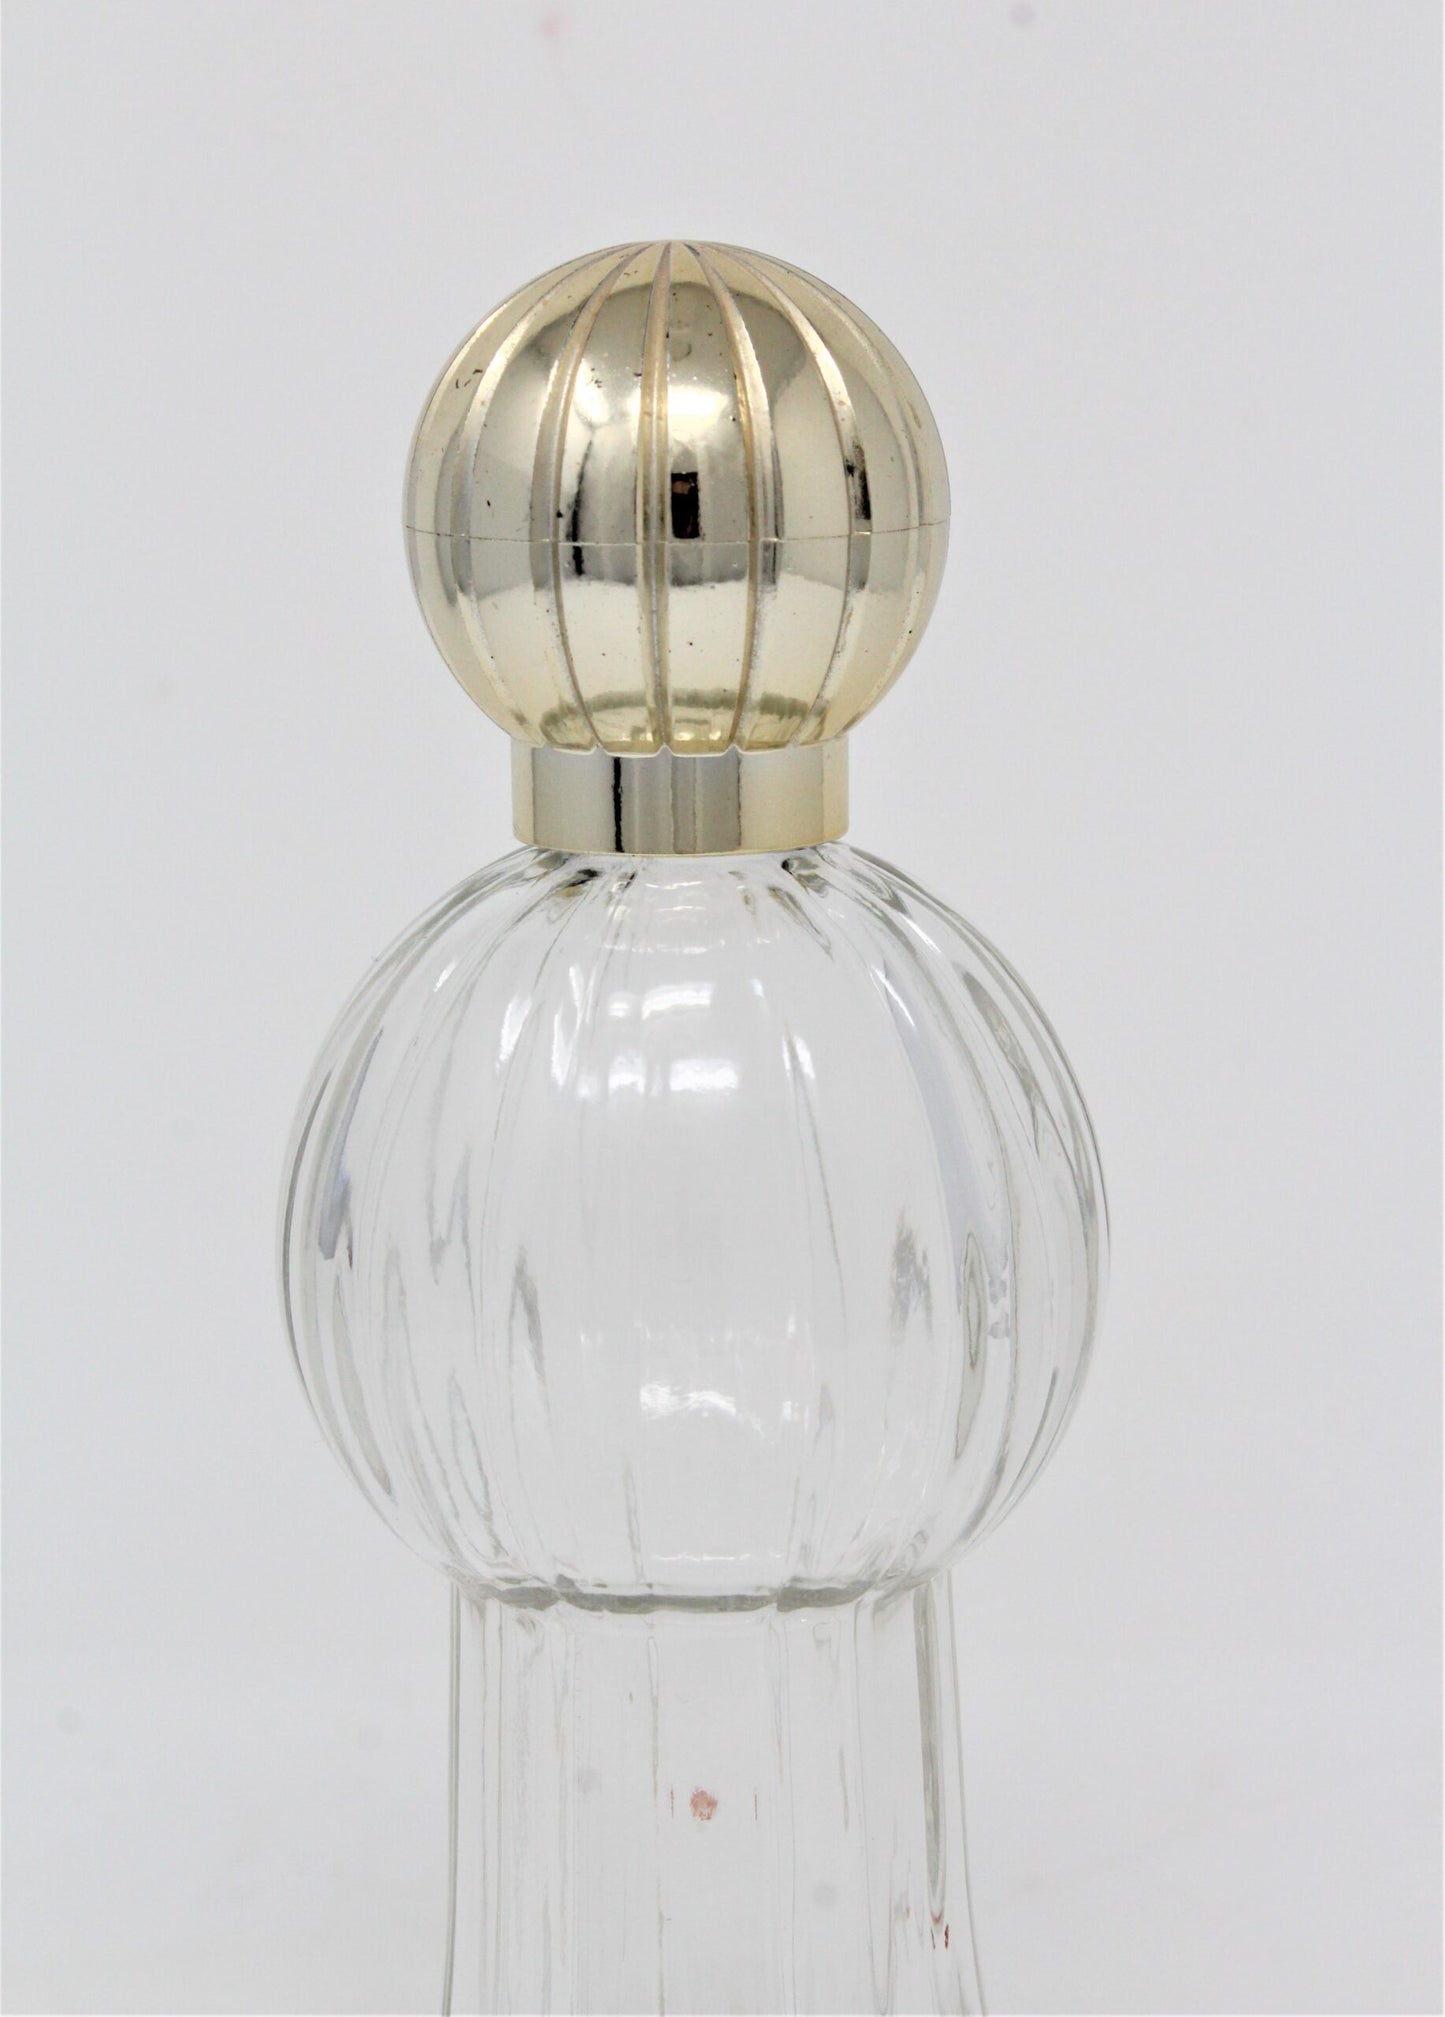 Perfume Bottle, Avon Perfume Bottle w/Gold Metal Top, Vintage